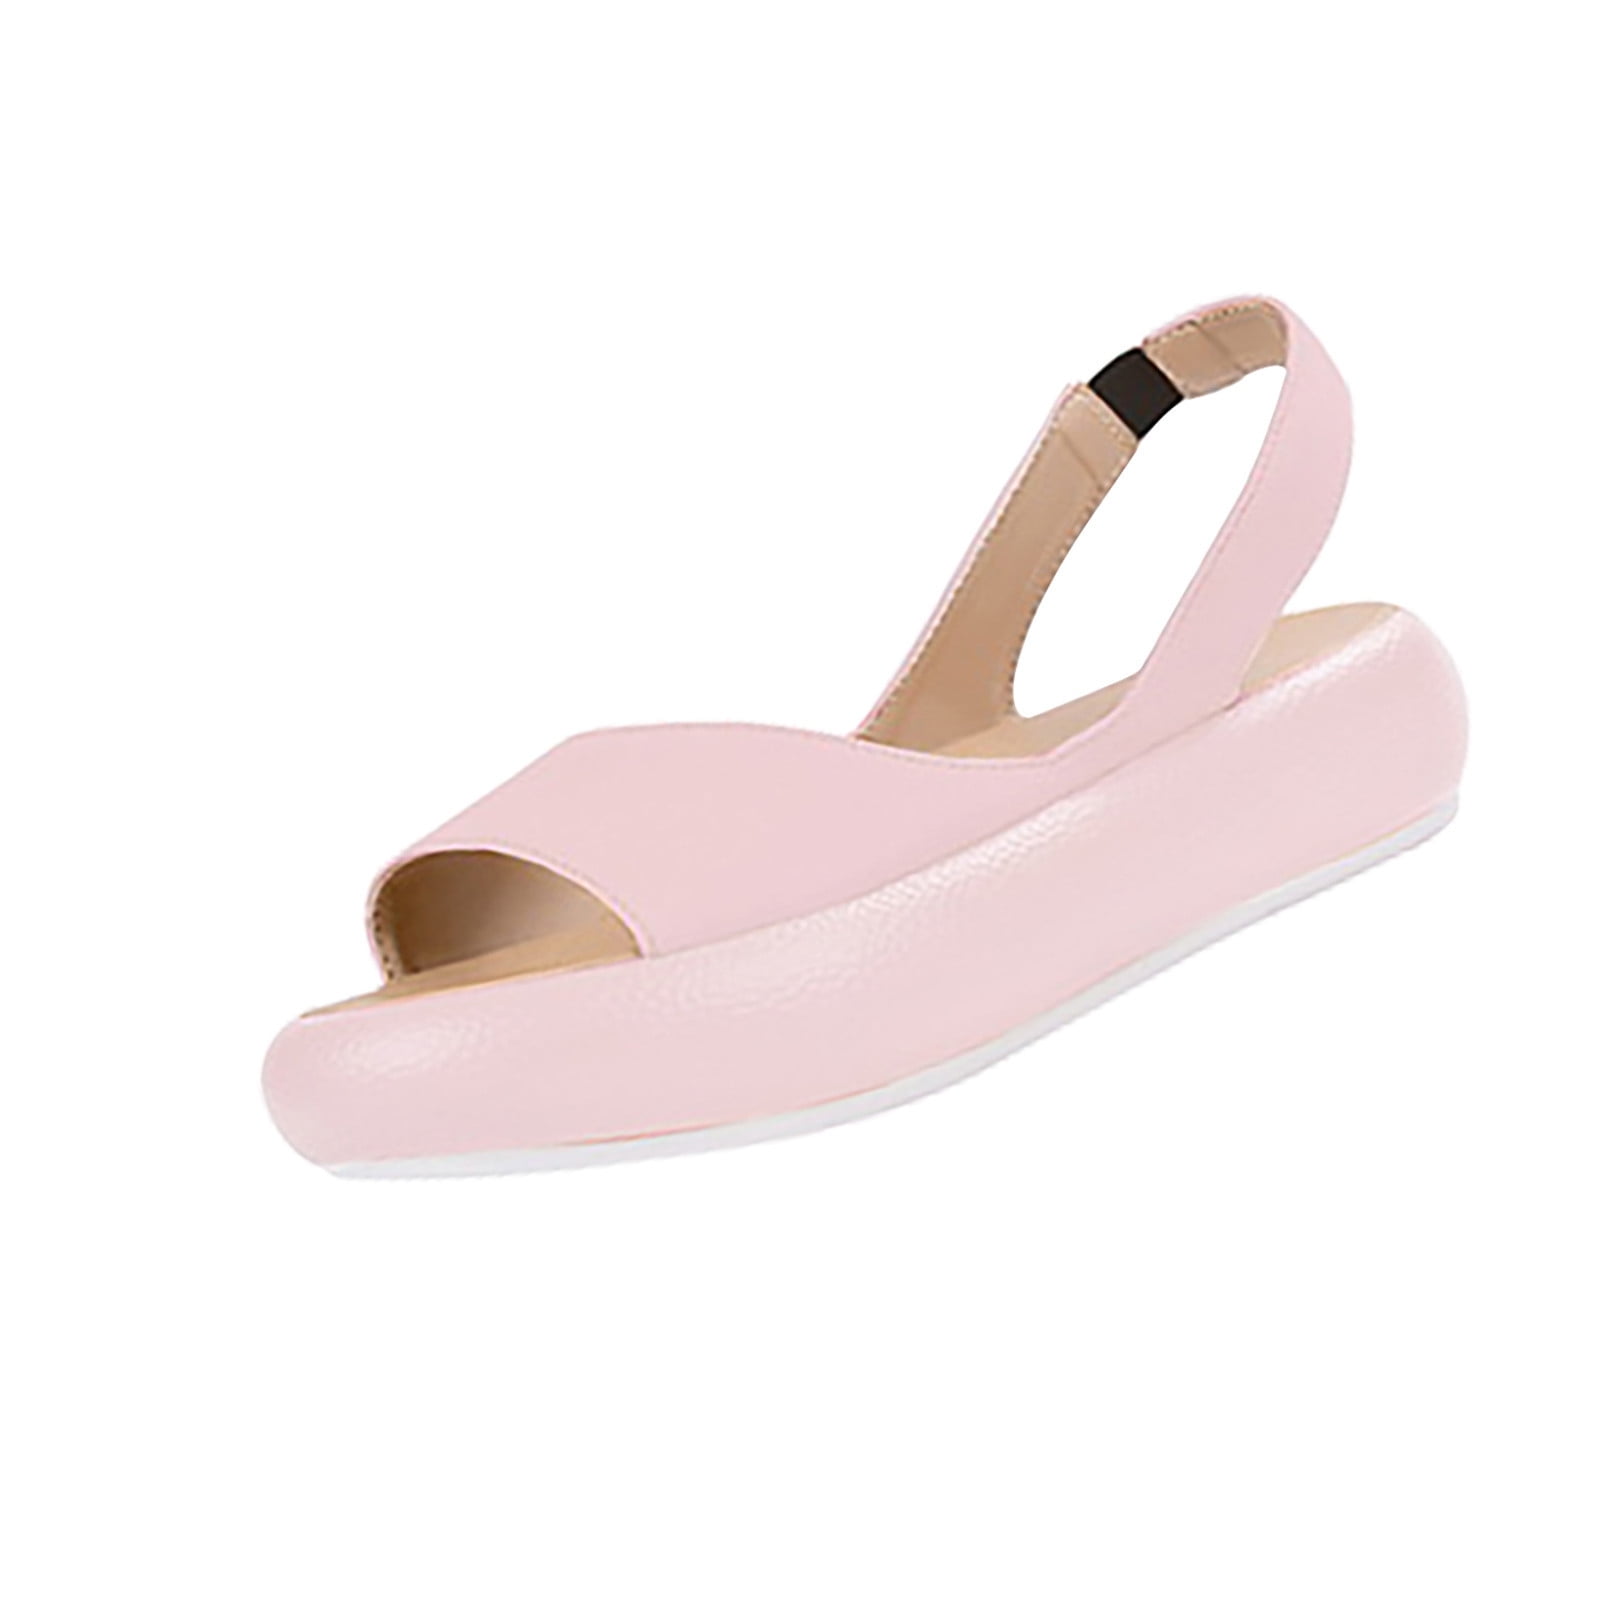 Legende Marine neutral Womens Wedge Sandals Solid Leather Open Toe Elastic Band Shoes Pink 38 -  Walmart.com